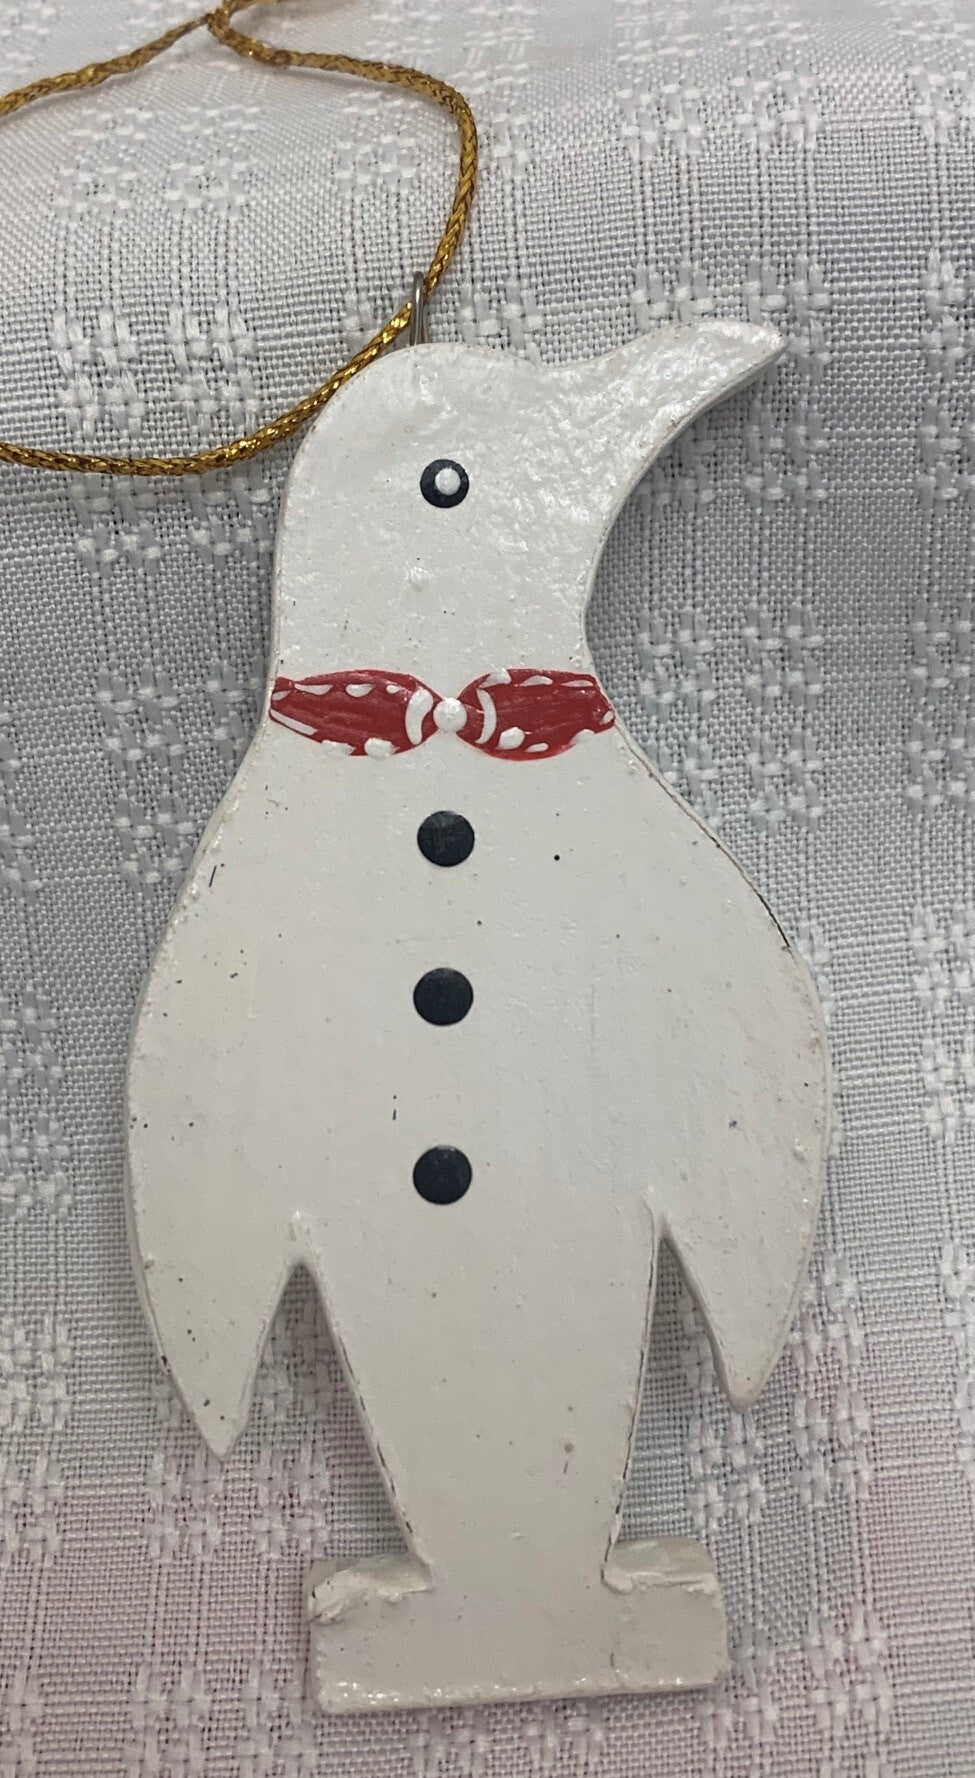 ornament - penguin - white/red bow tie - 10cm